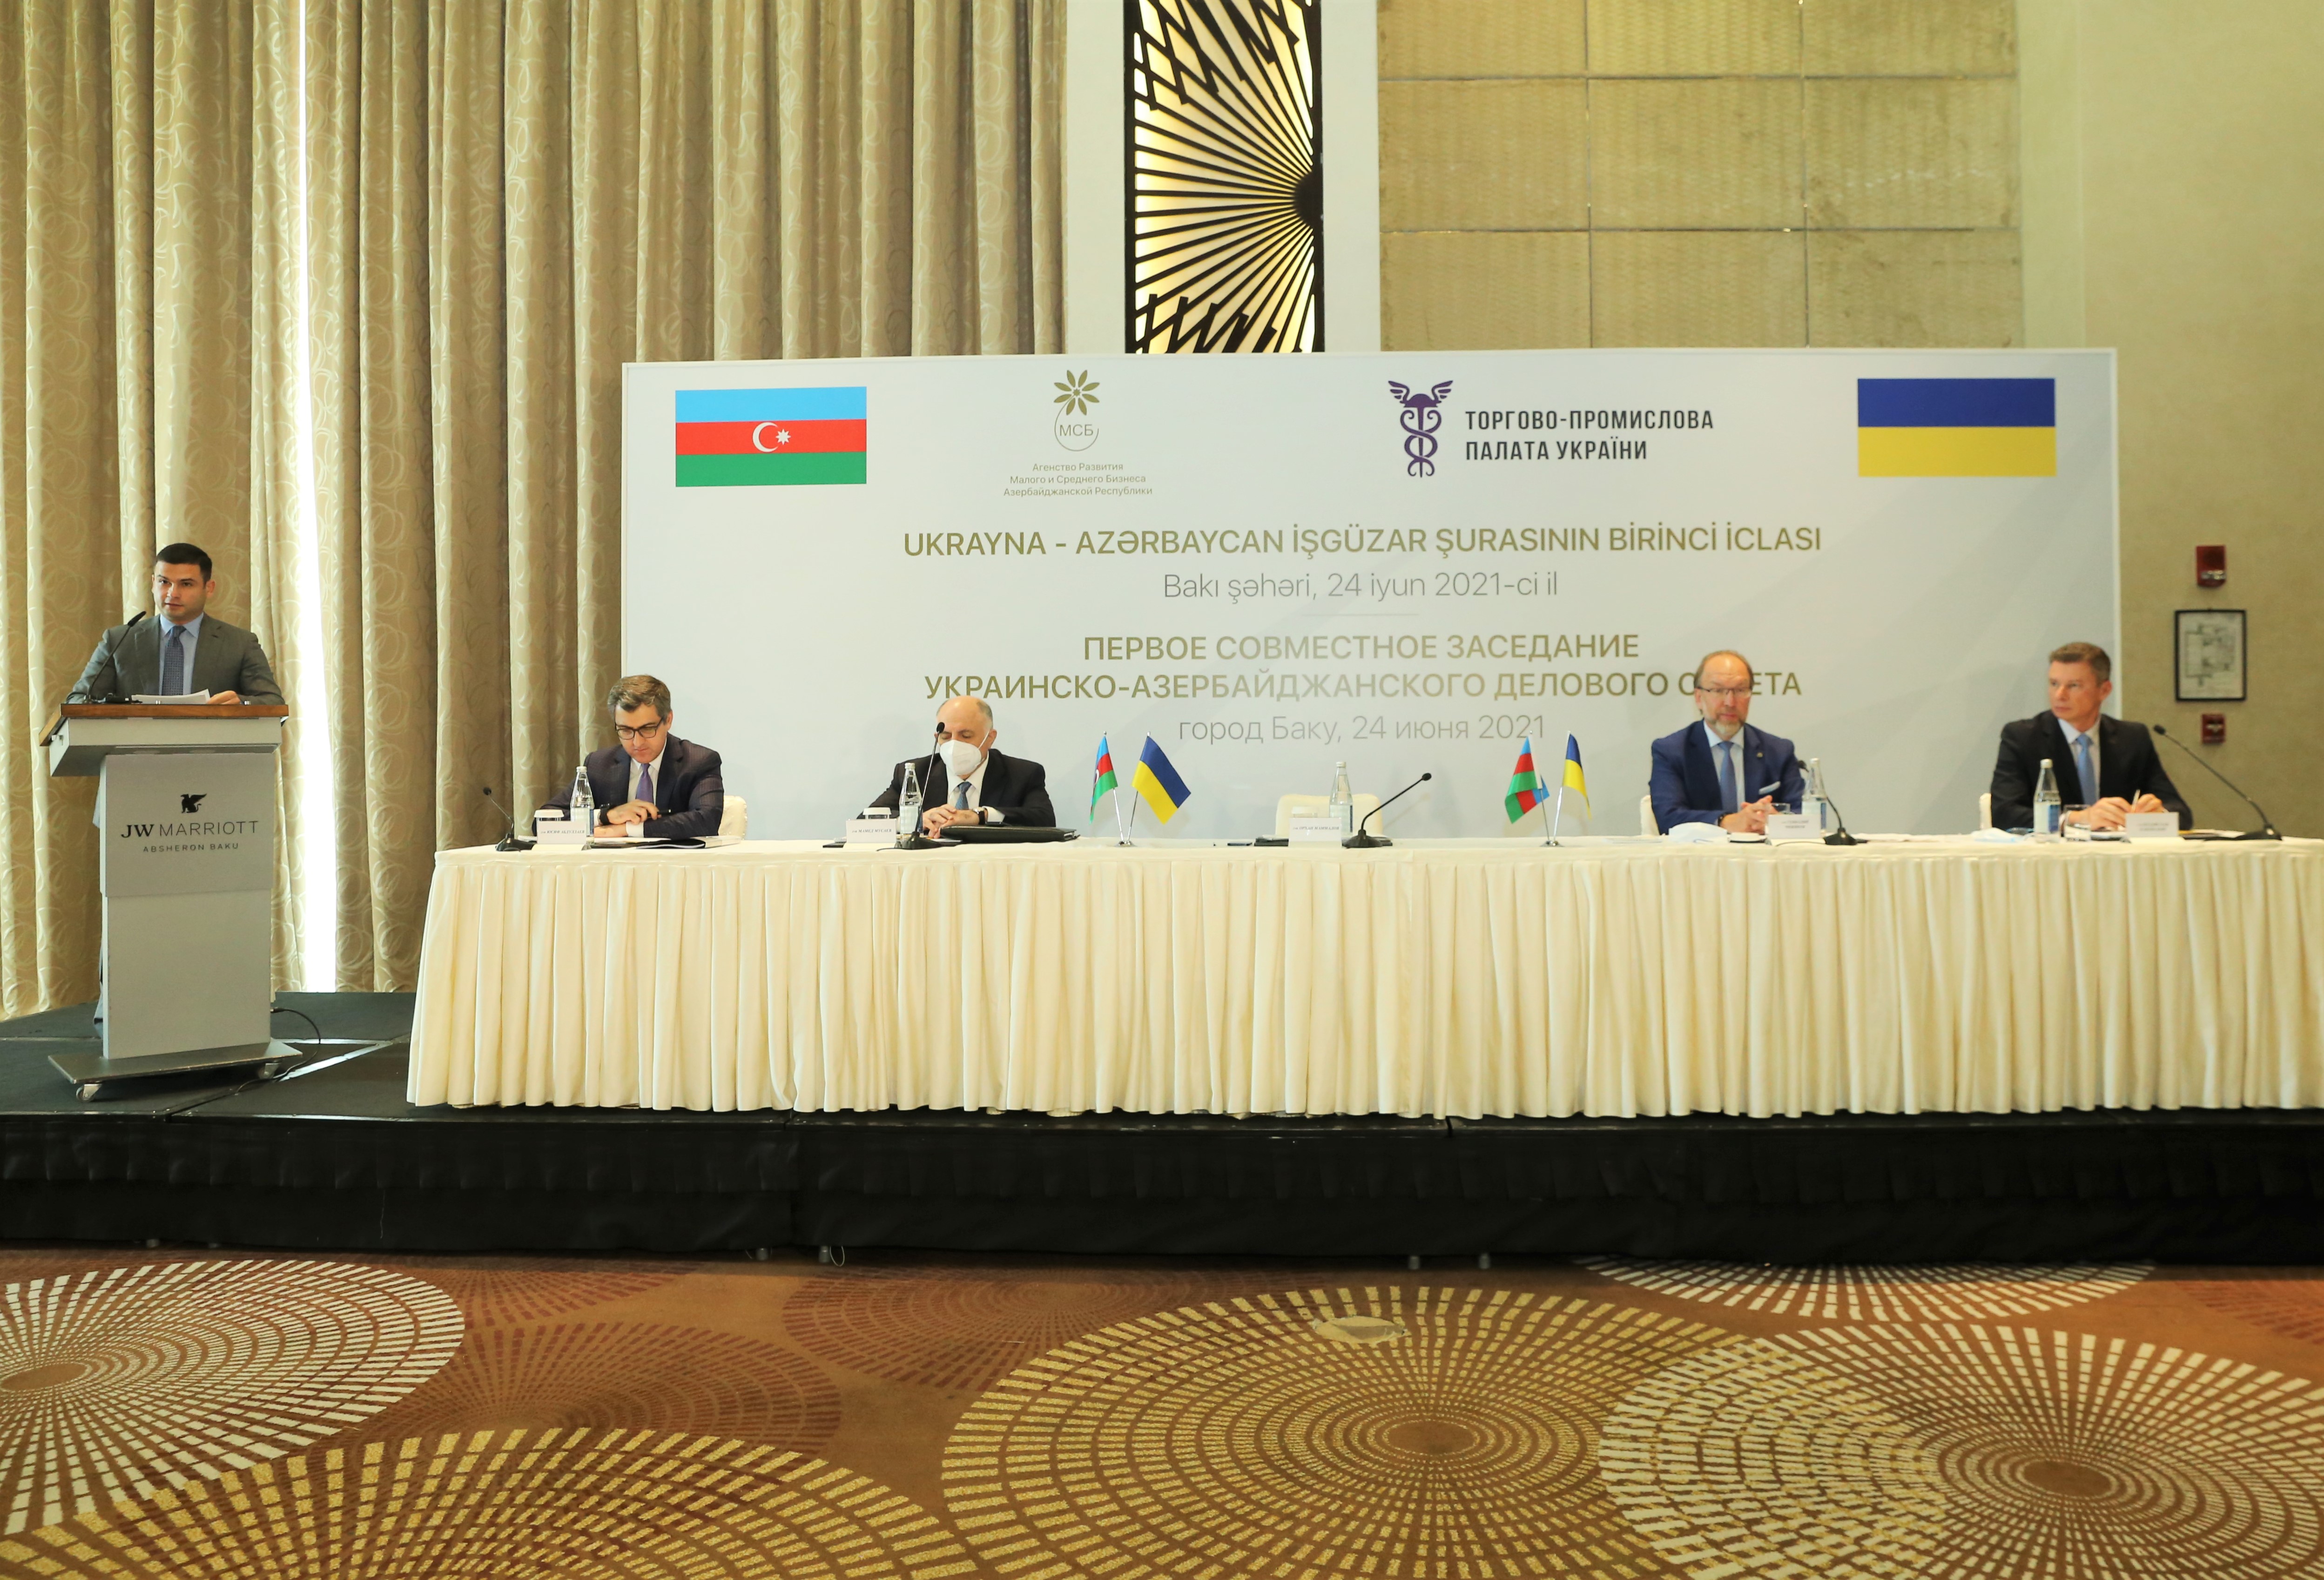 The Ukrainian-Azerbaijani Business Council has been established 